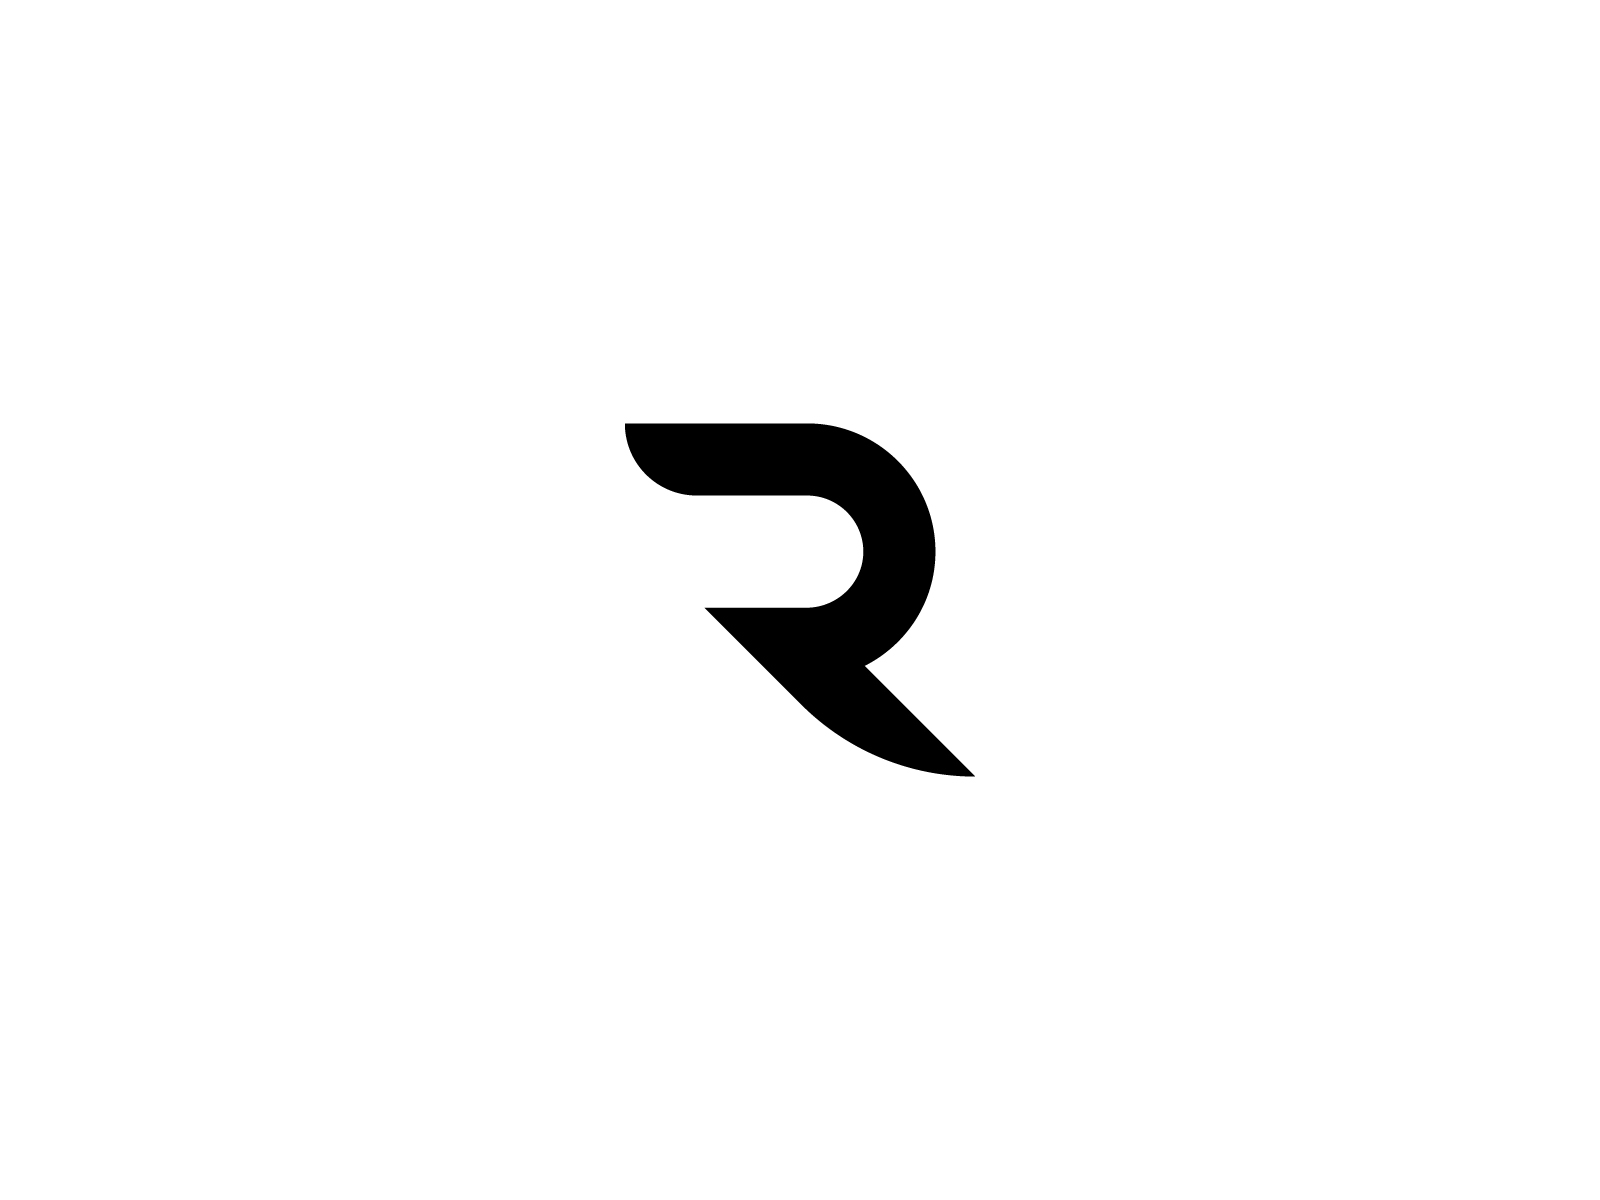 R logo by Rohmatul Insan on Dribbble